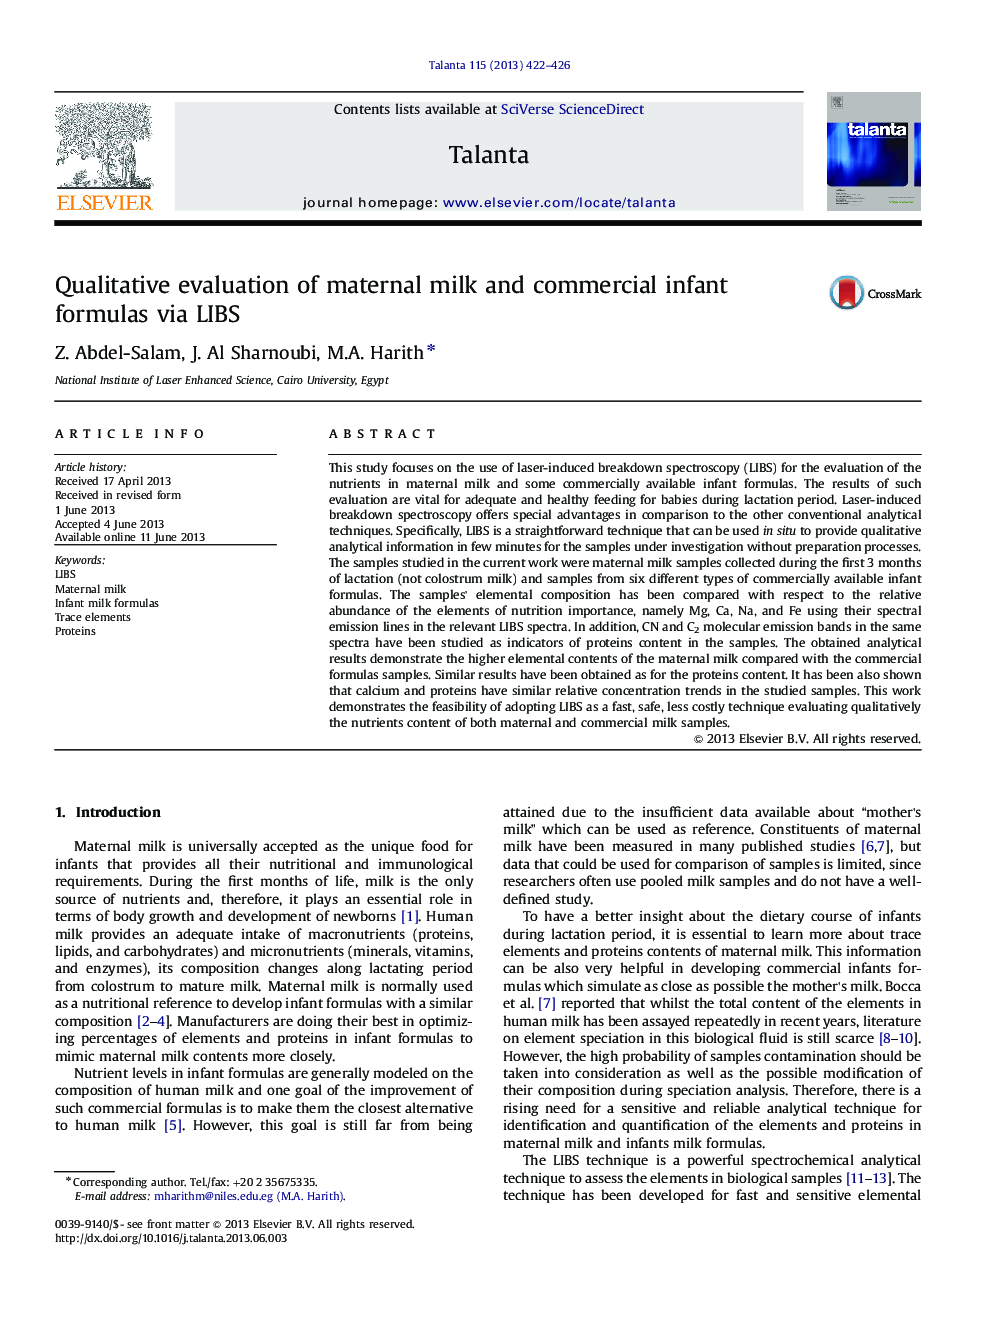 Qualitative evaluation of maternal milk and commercial infant formulas via LIBS